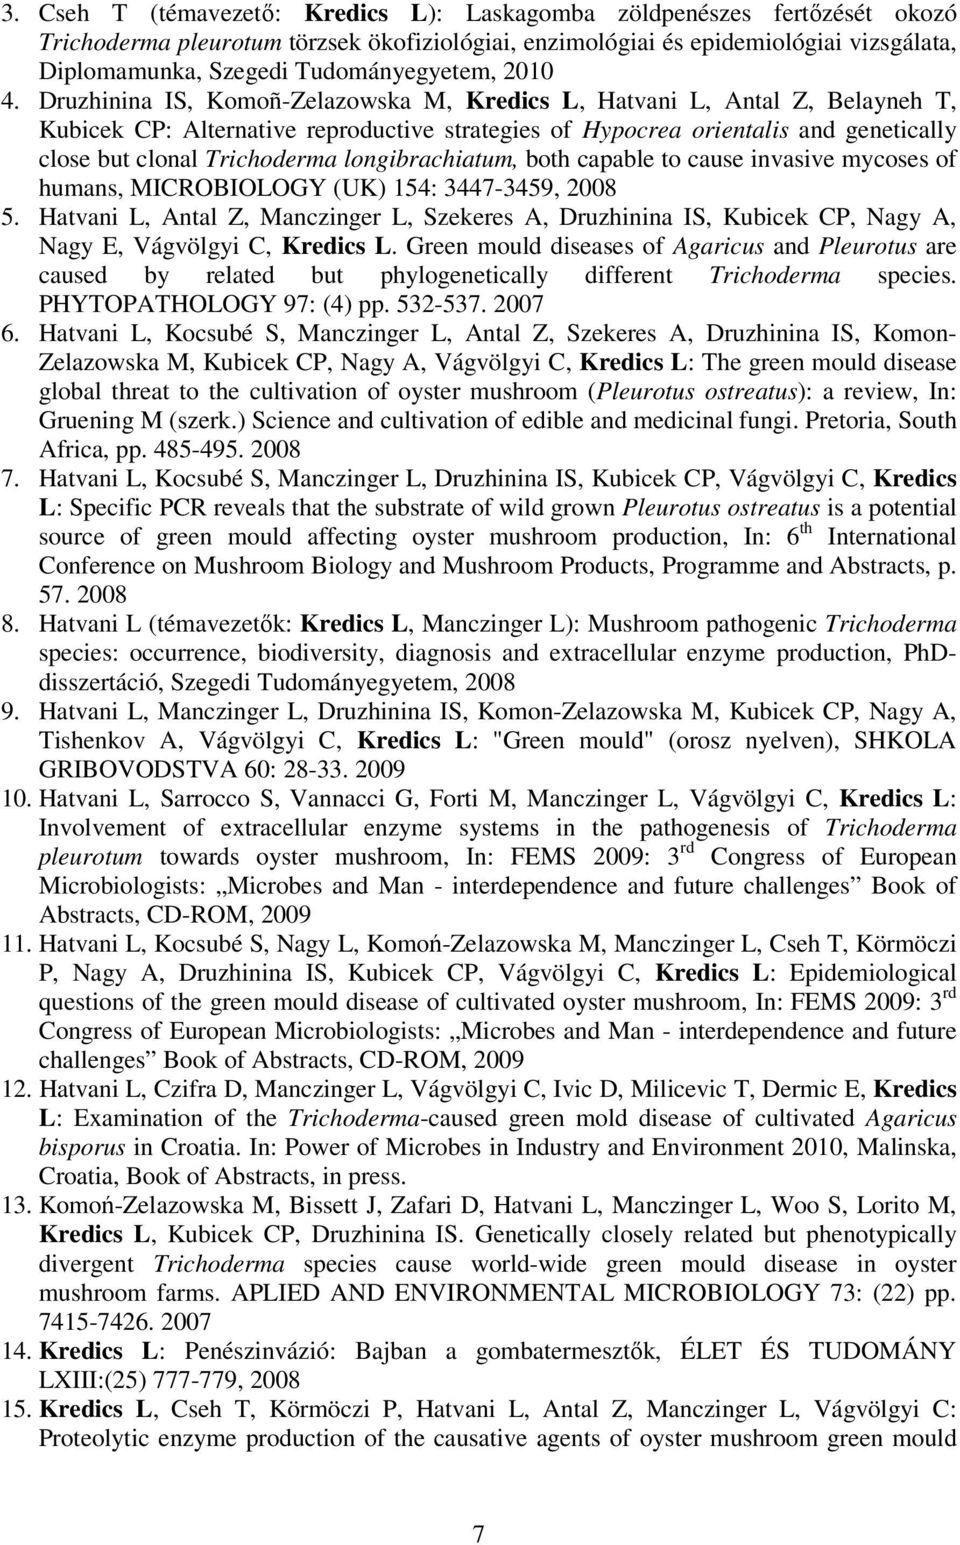 Druzhinina IS, Komoñ-Zelazowska M, Kredics L, Hatvani L, Antal Z, Belayneh T, Kubicek CP: Alternative reproductive strategies of Hypocrea orientalis and genetically close but clonal Trichoderma